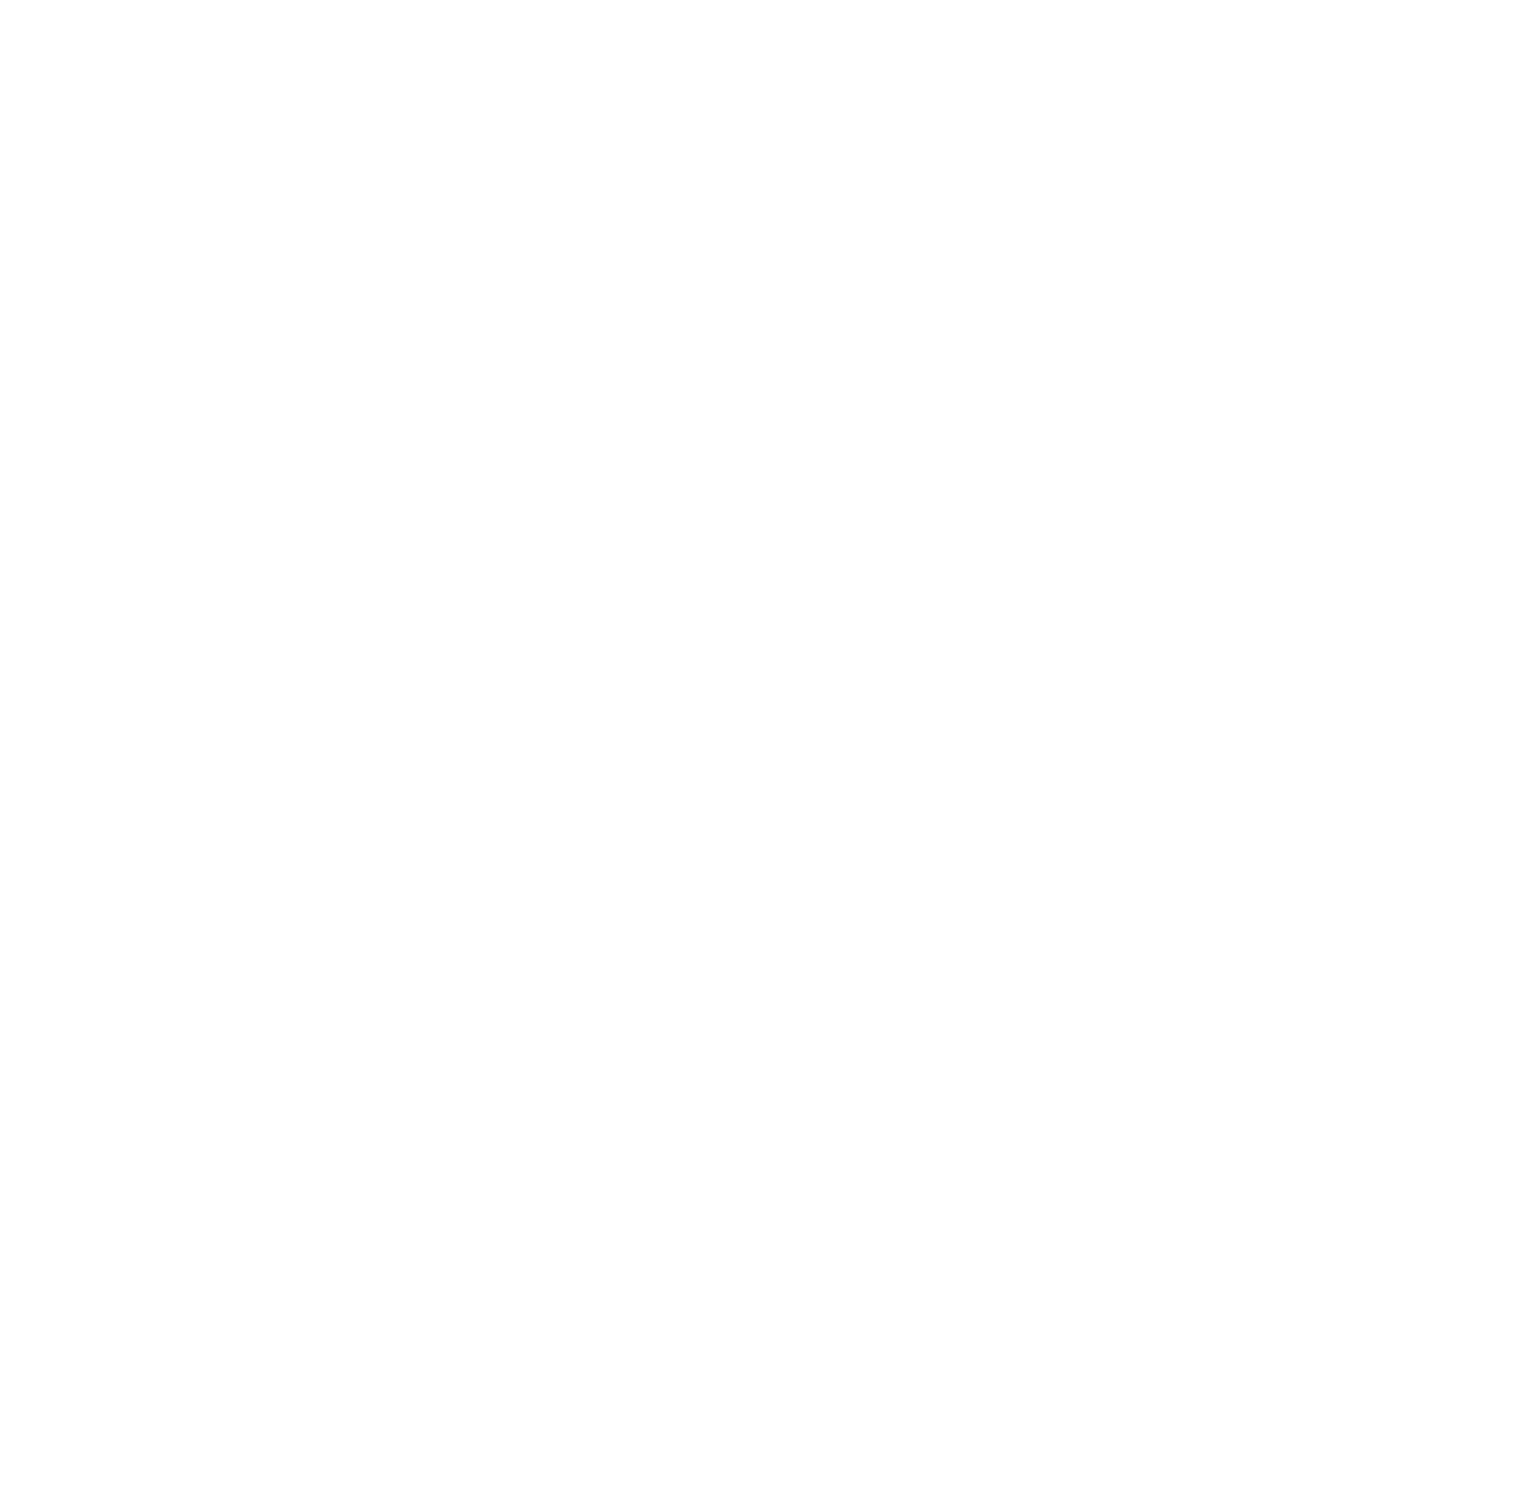 Exclusive Networks logo for dark backgrounds (transparent PNG)